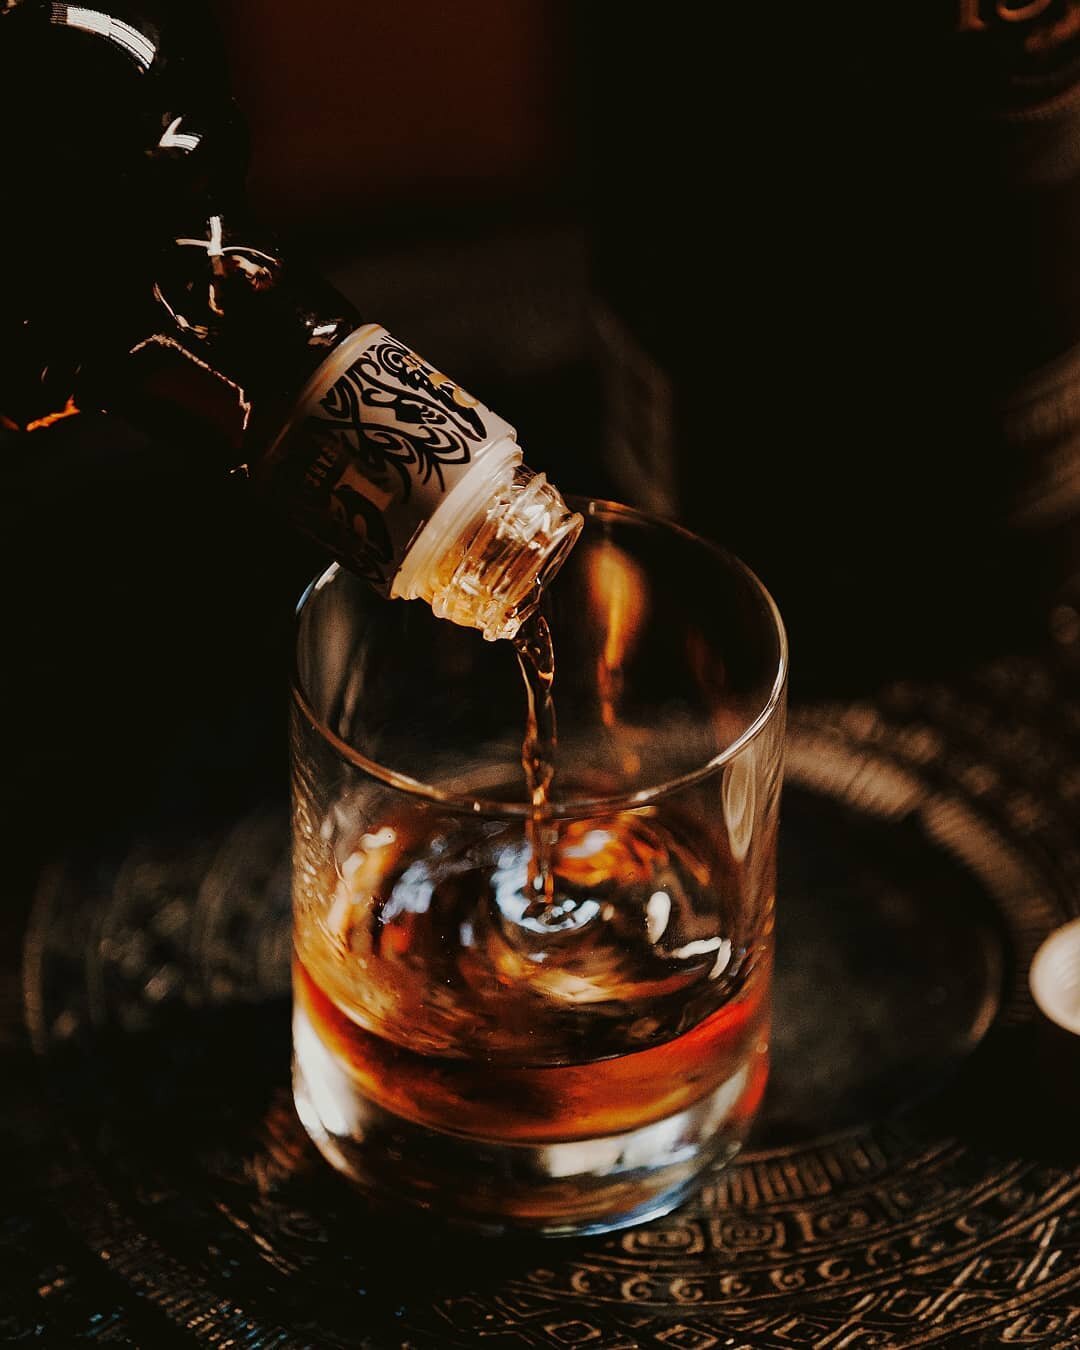 Happy Rum Day

#angostura #houseofangostura #premiumrum #1824 #moodygrams #creativecaptures #creativelockdown #agameoftones #darkandmoody #rum #rokinon #rokinon135mm #drinkstagram #spirits #enjoyresponsibly #dontdrinkanddrive #adlabtt